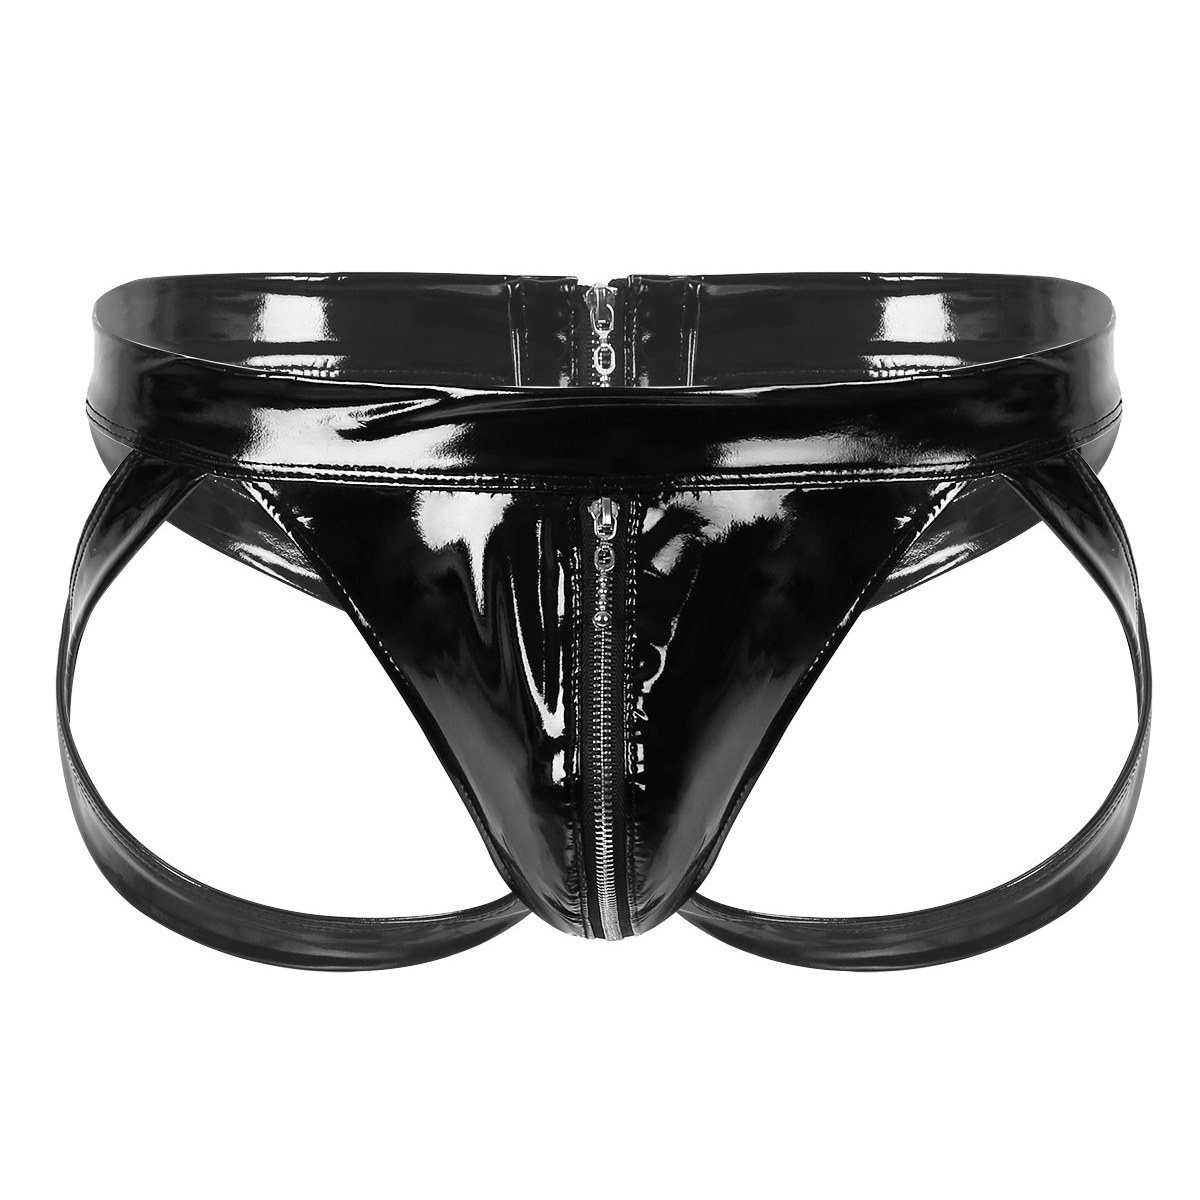 Mens Wet Look Shiny Leather Briefs Jockstrap Underwear Thong G-string Panties 